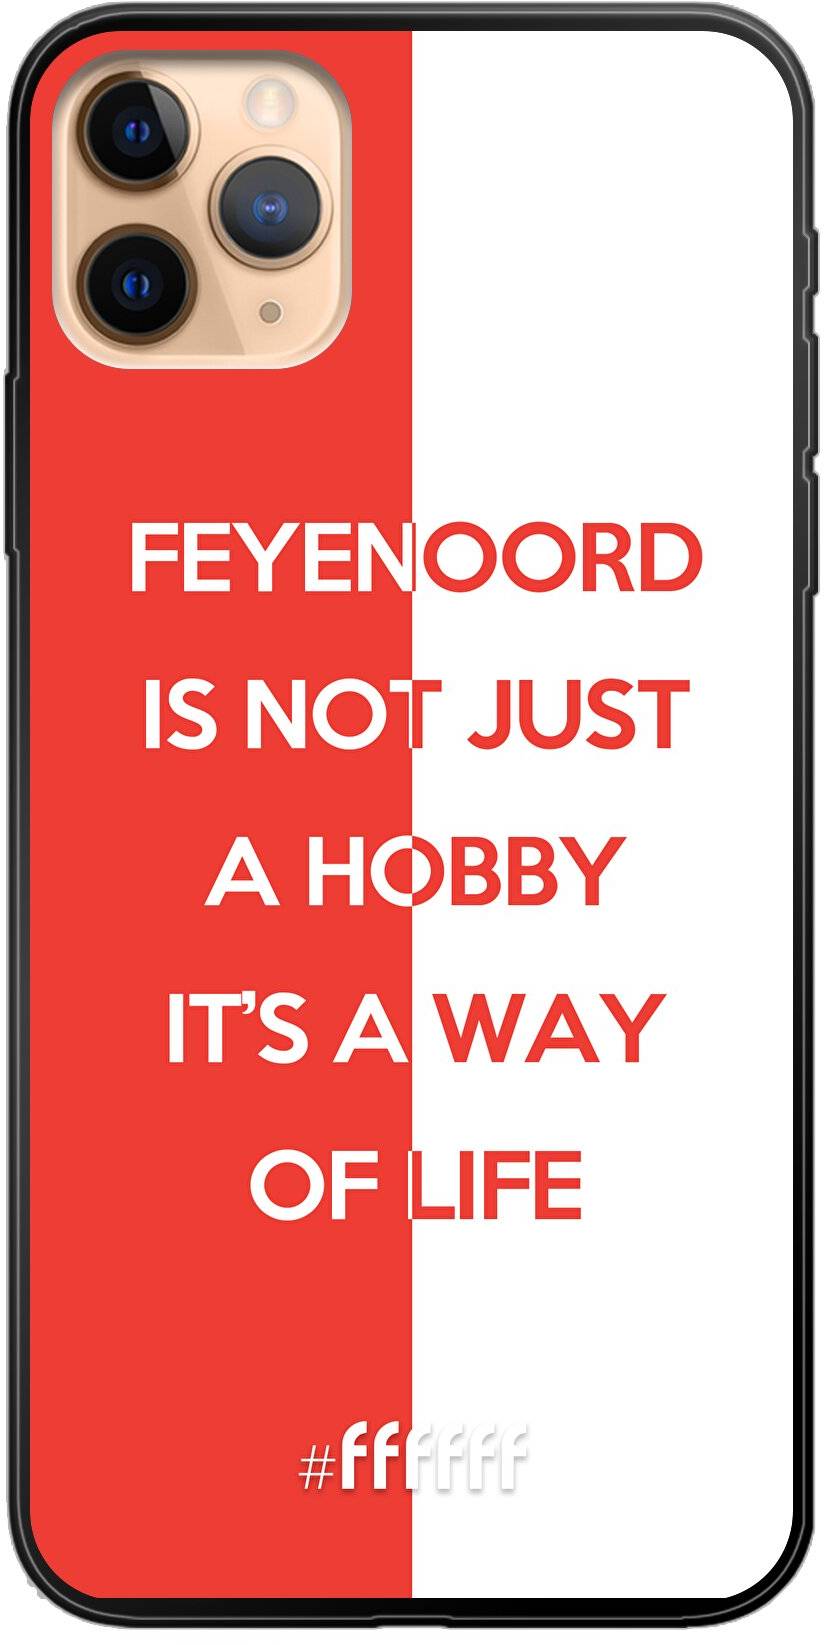 Feyenoord - Way of life iPhone 11 Pro Max